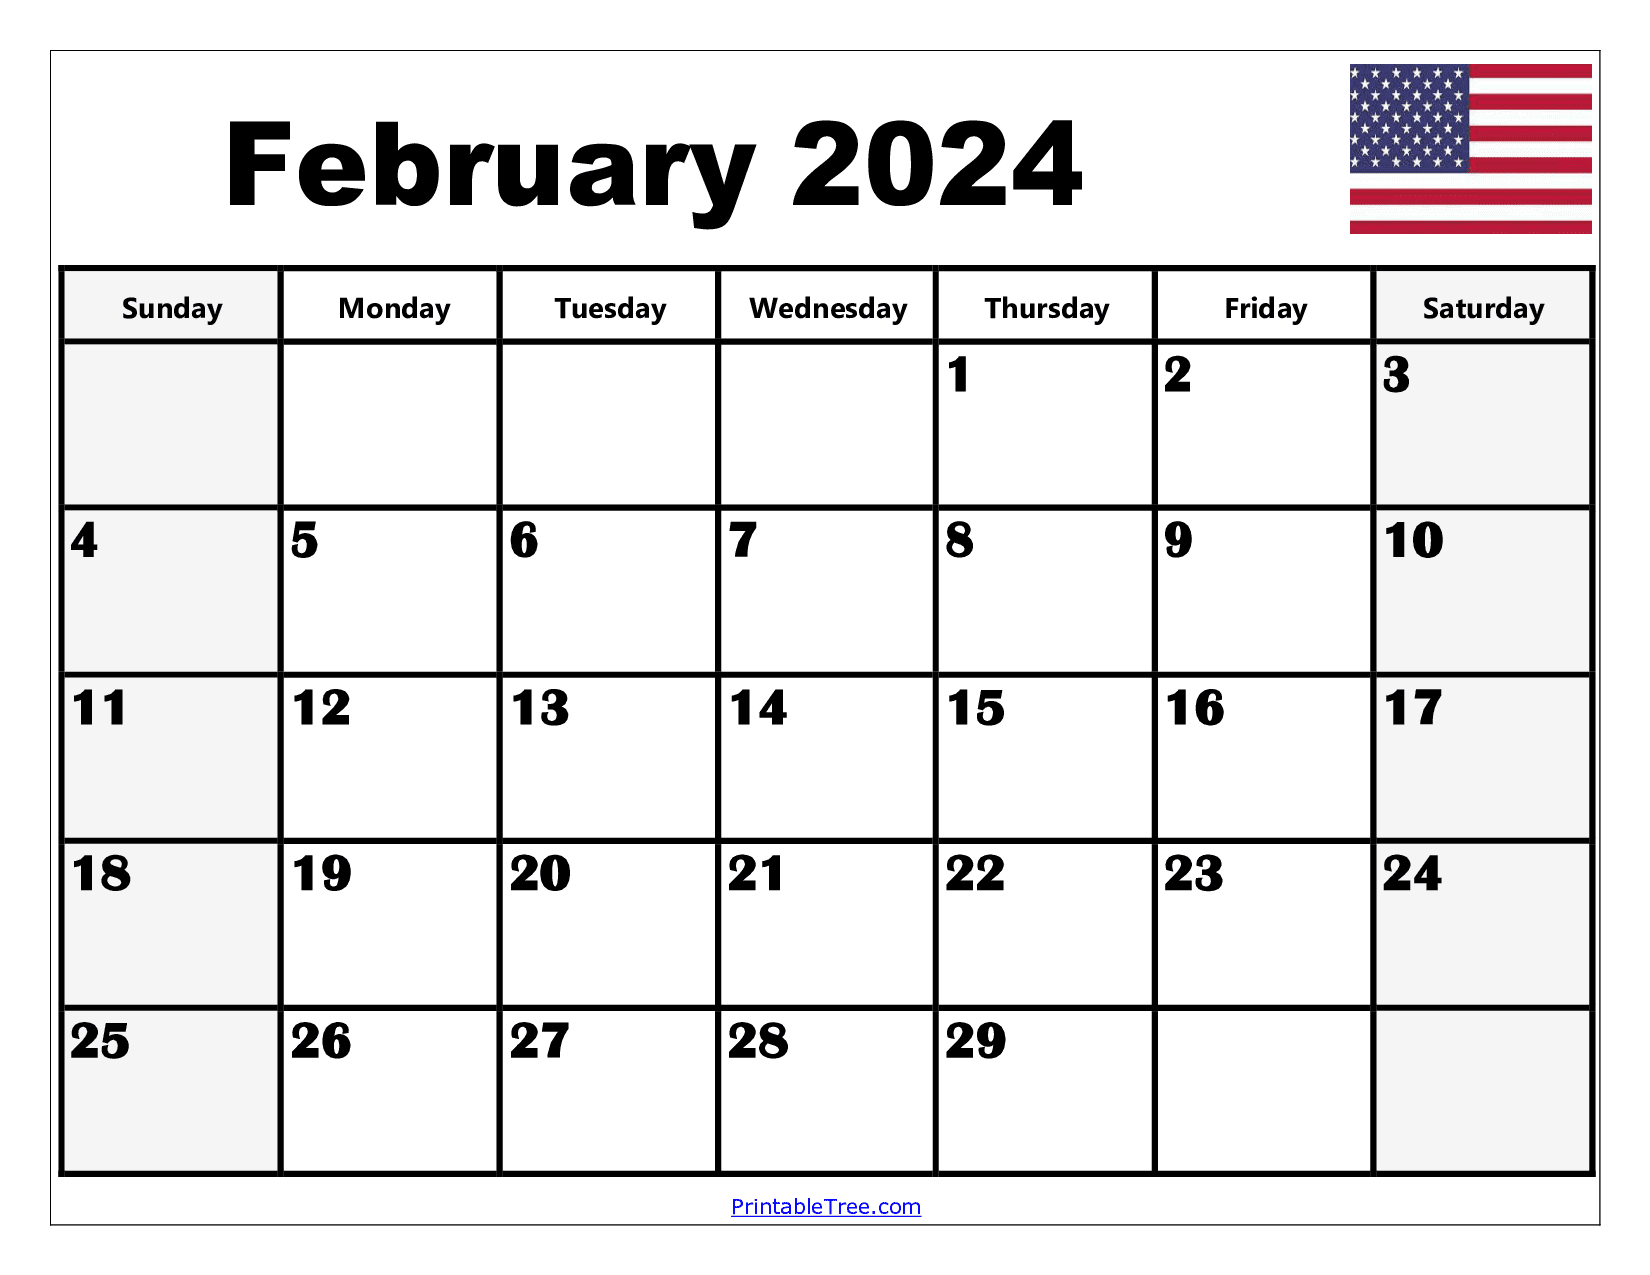 February 2024 Calendar Printable Pdf Template With Holidays | Printable Calendar 2024 Feb